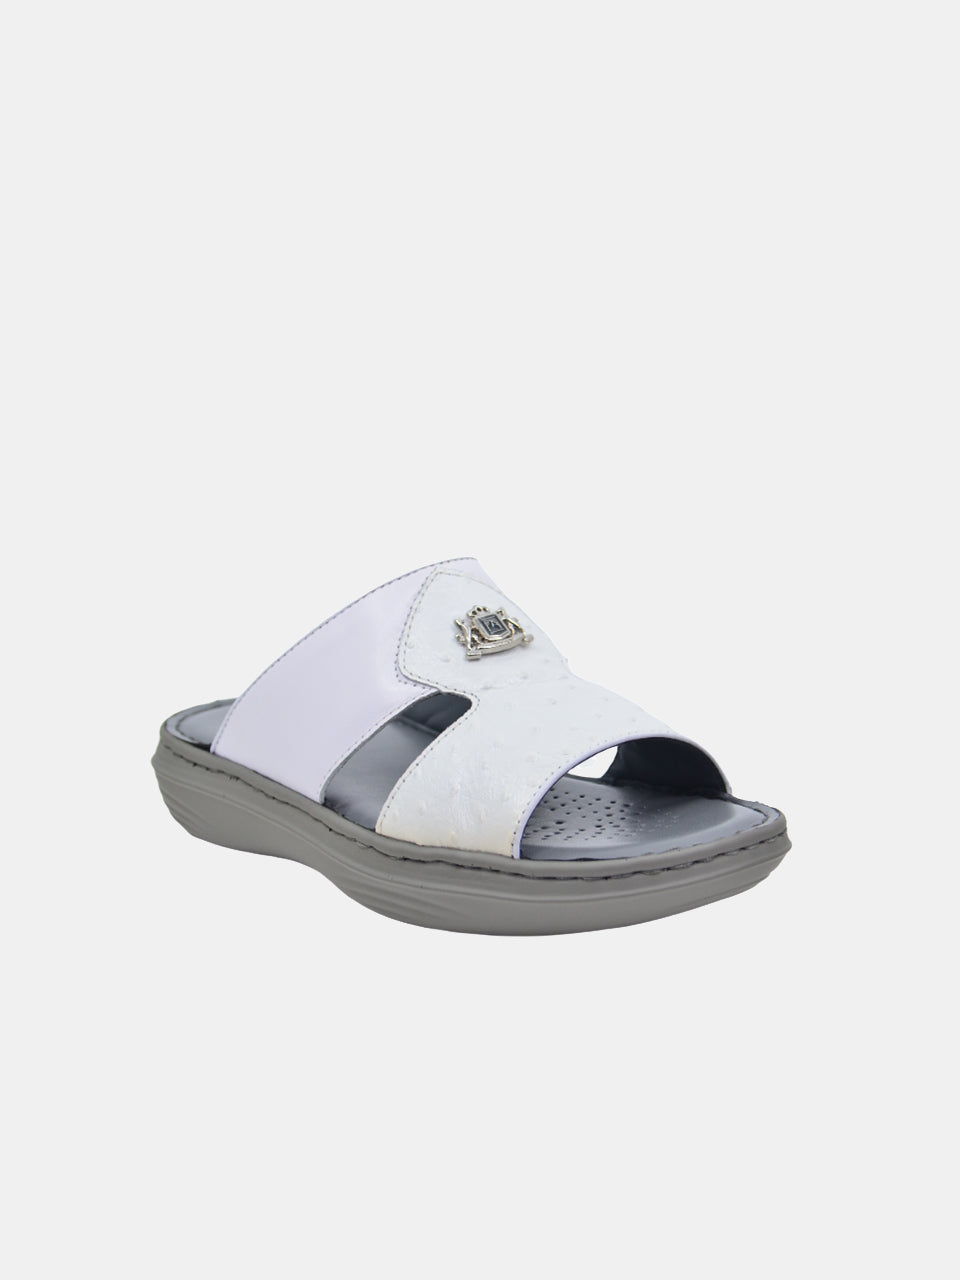 Barjeel Uno 21410-2 Men's Arabic Sandals #color_White